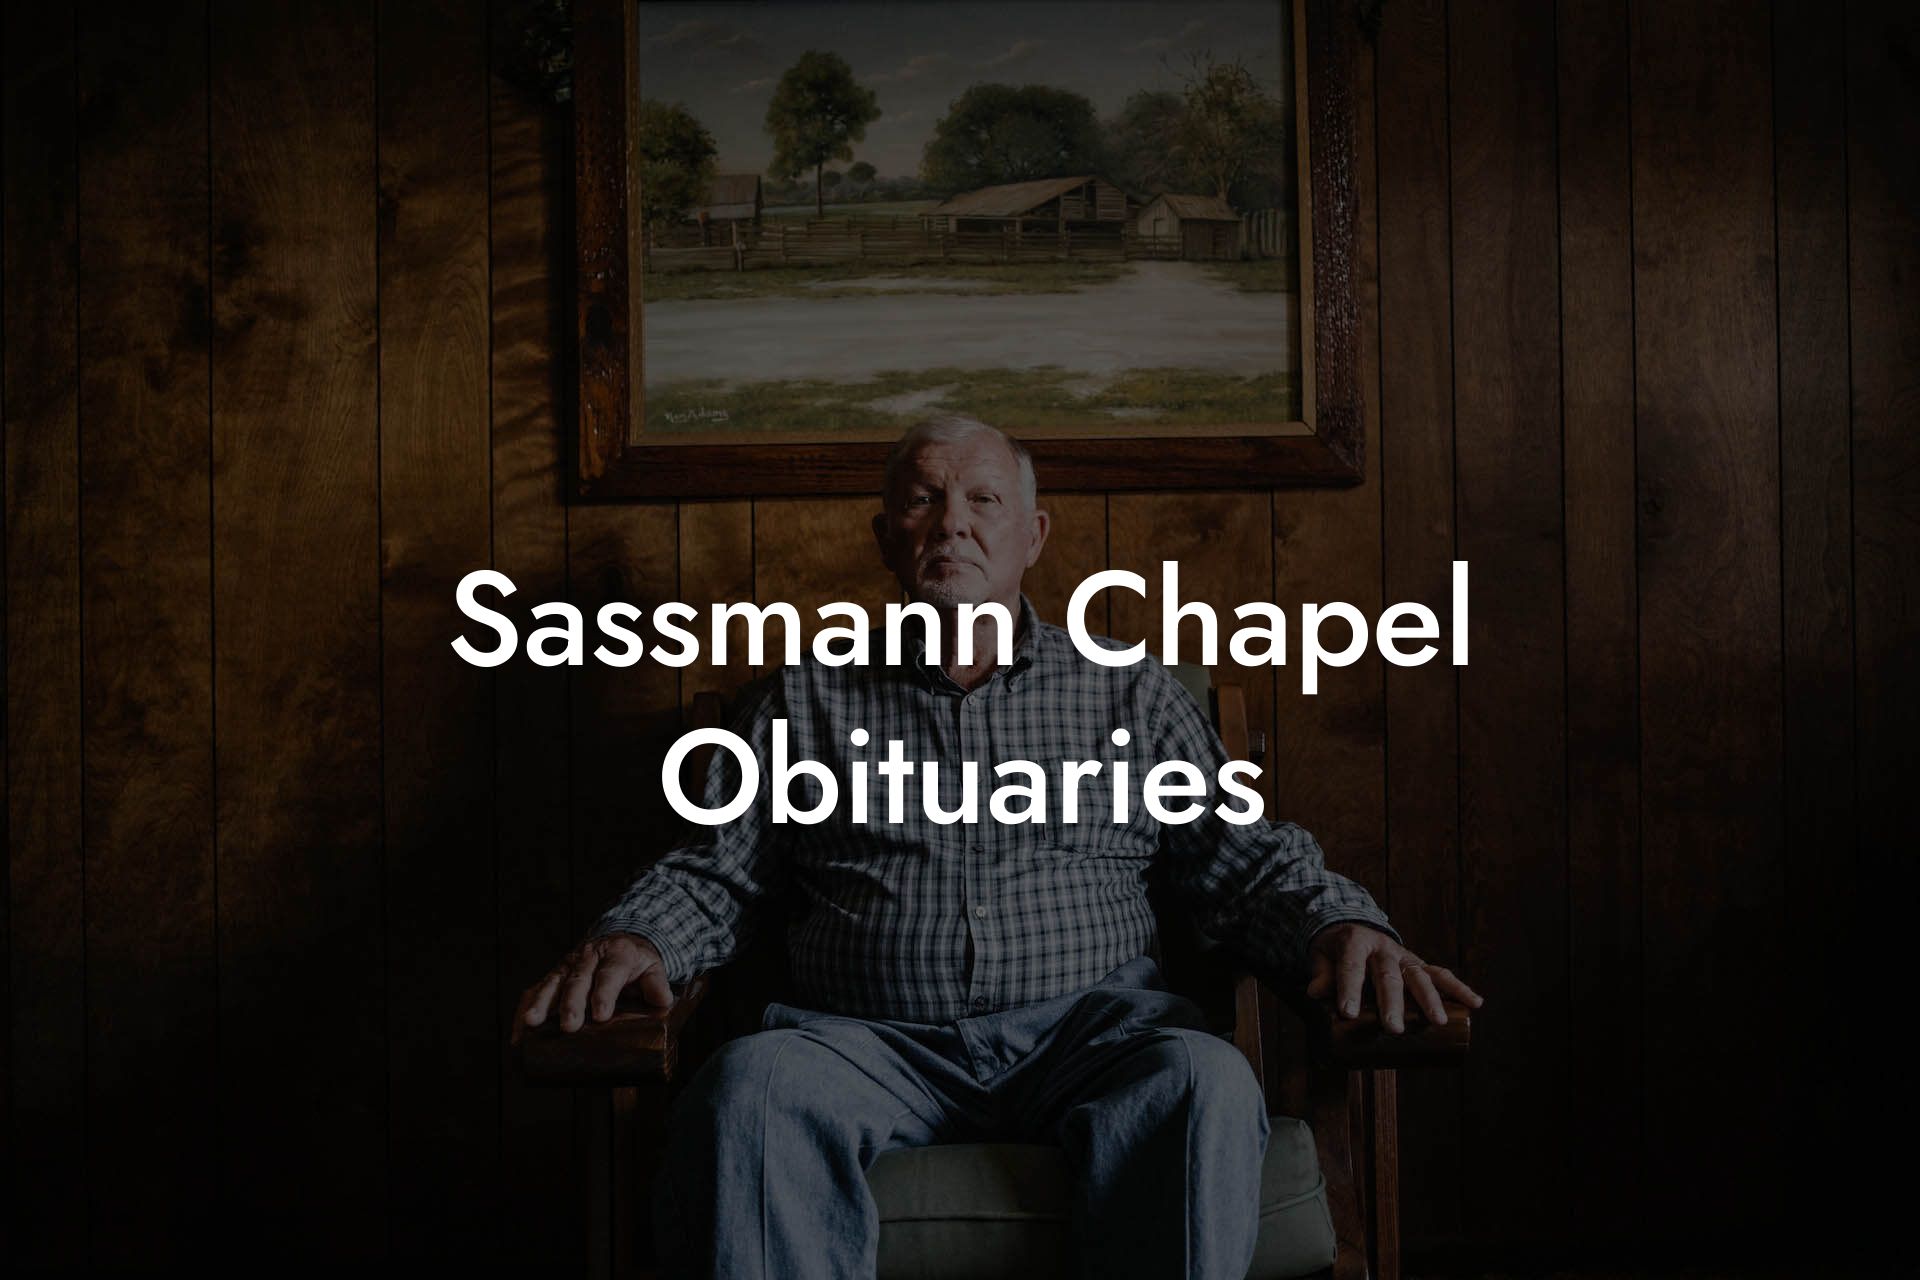 Sassmann Chapel Obituaries